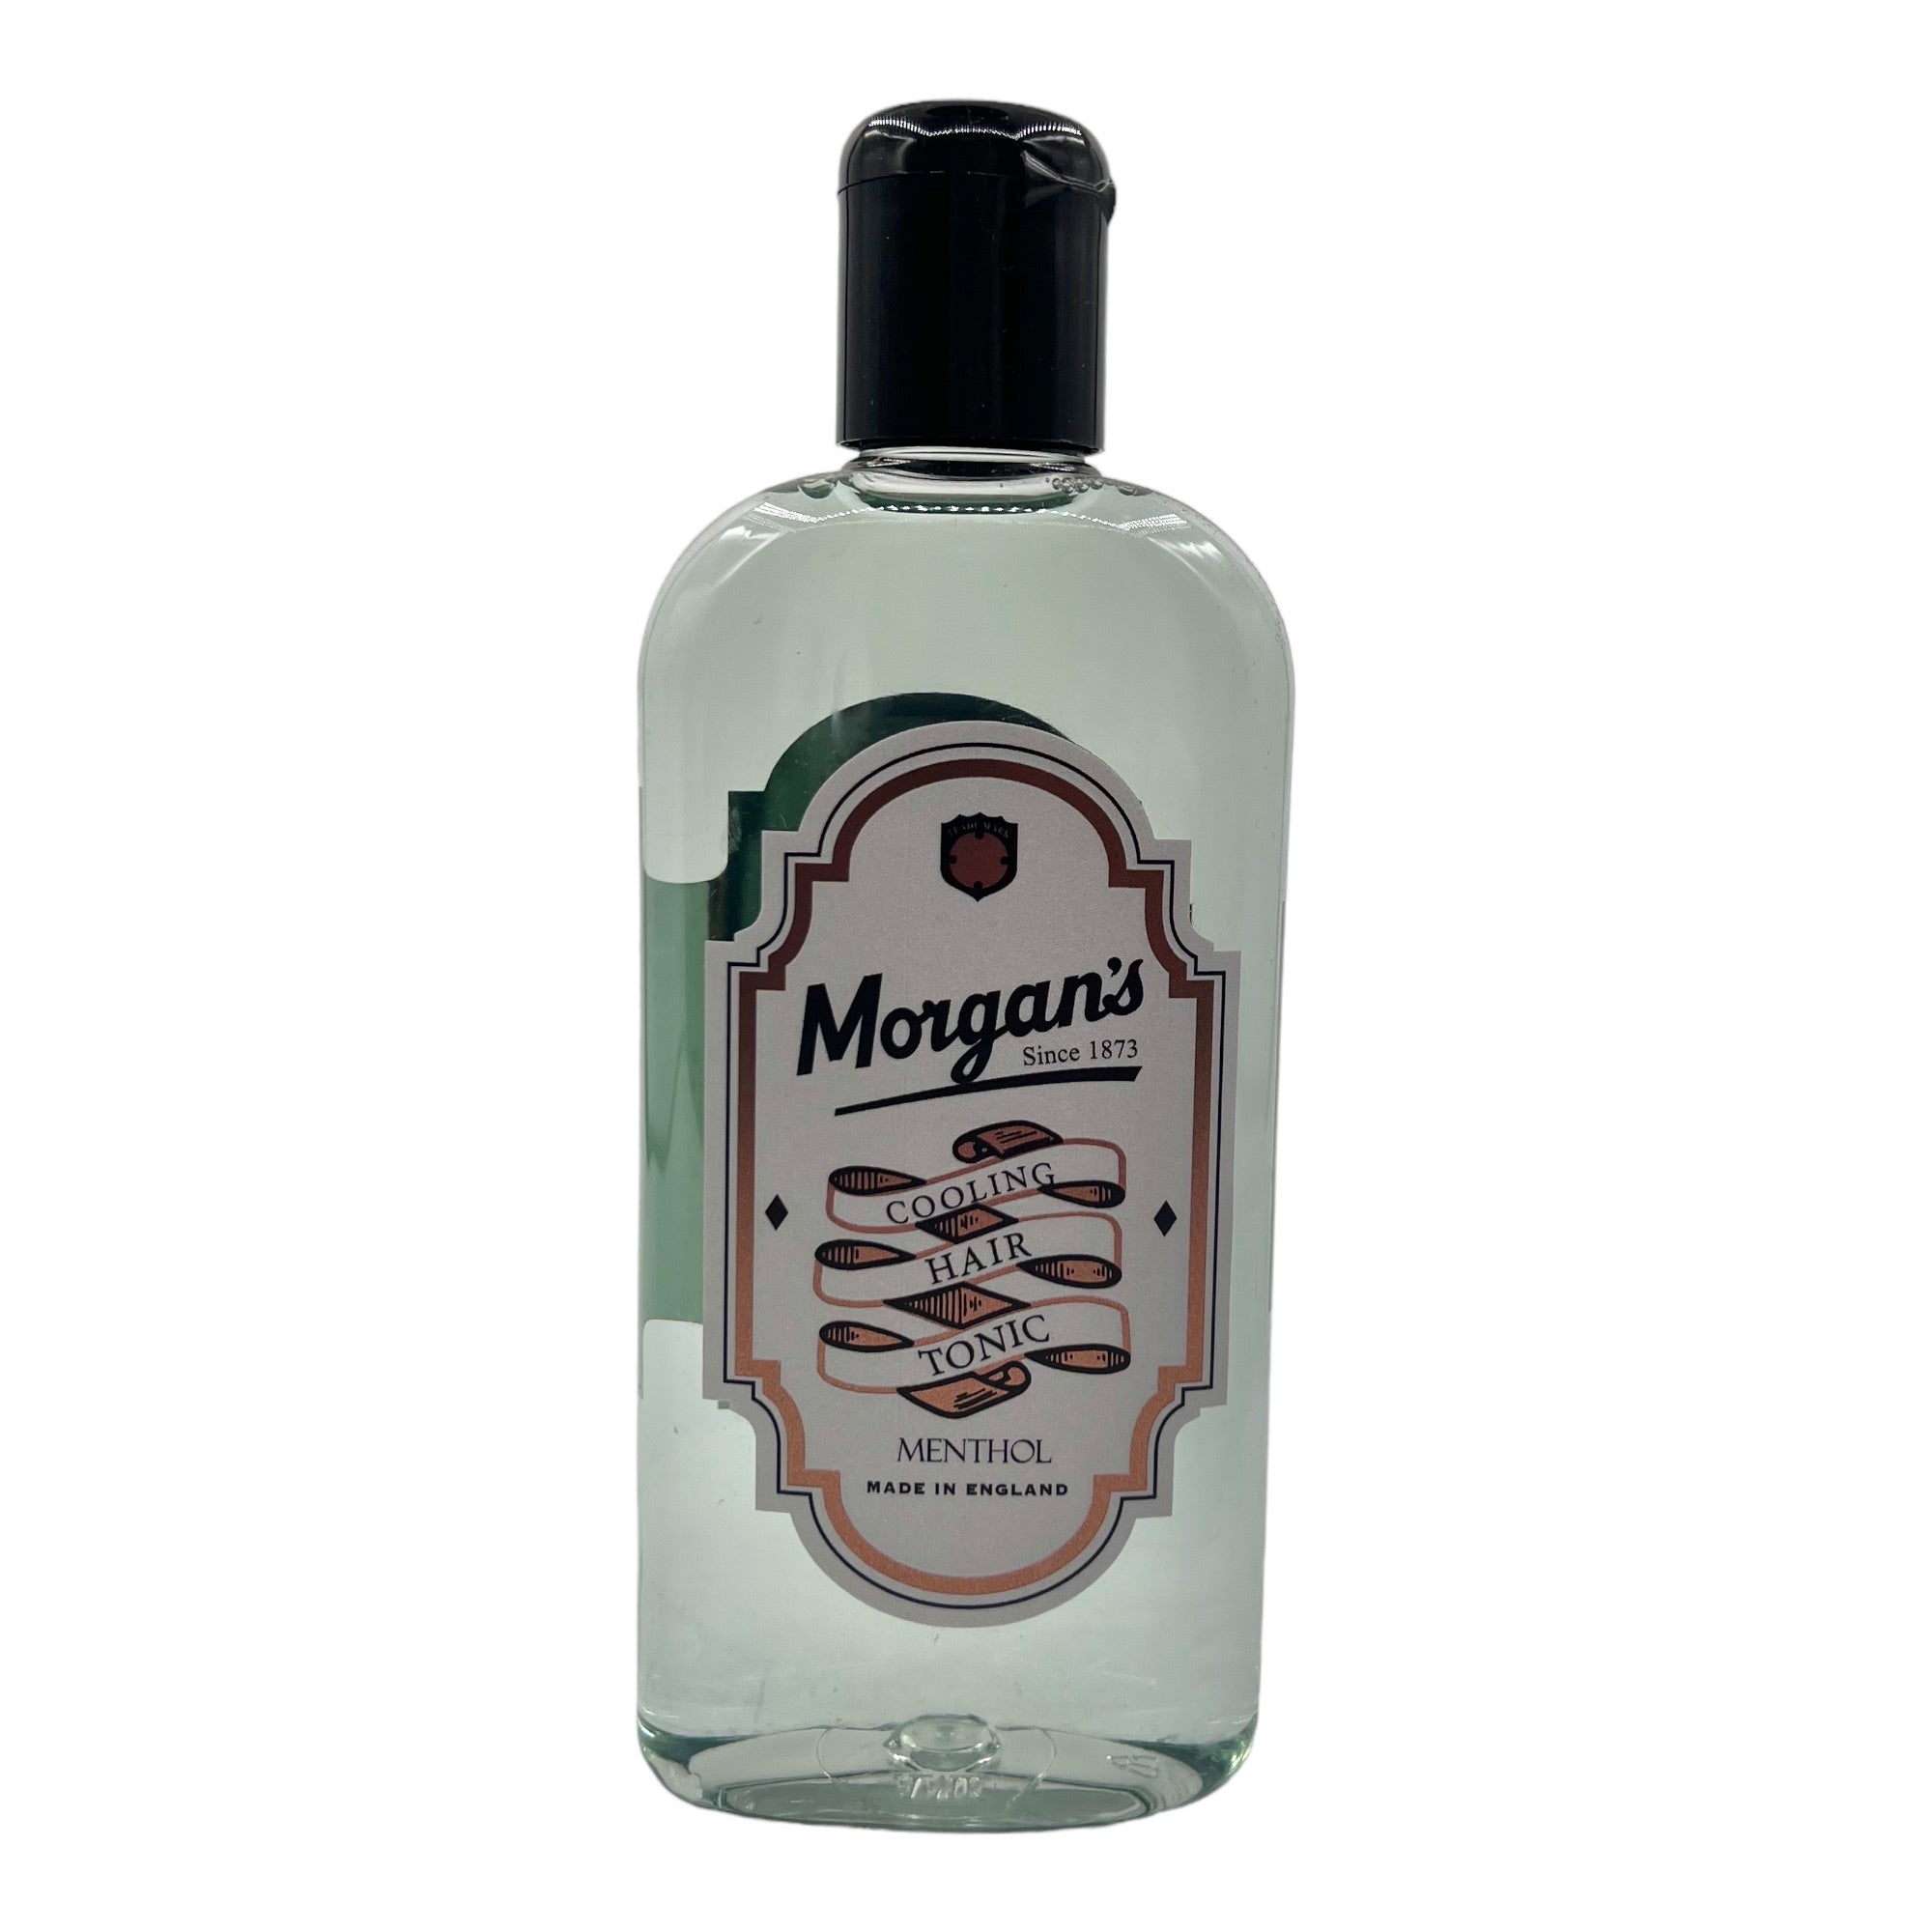 Morgan's - Cooling Hair Tonic Menthol 250ml